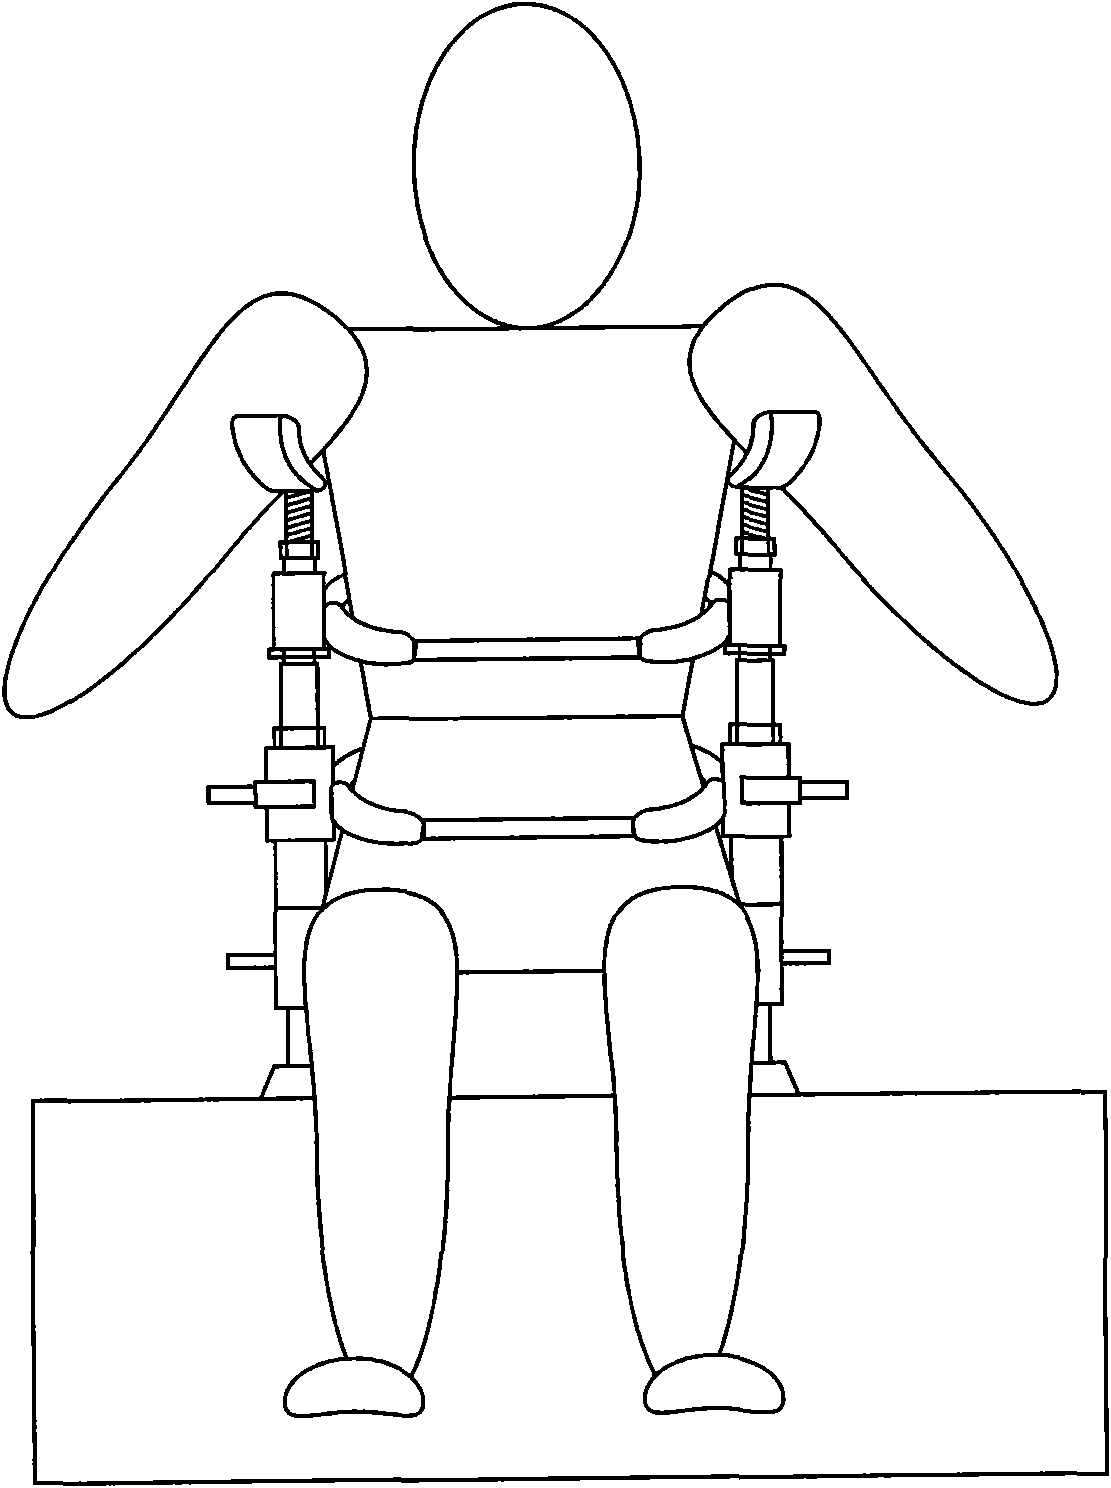 Portable lumbar vertebra tractor